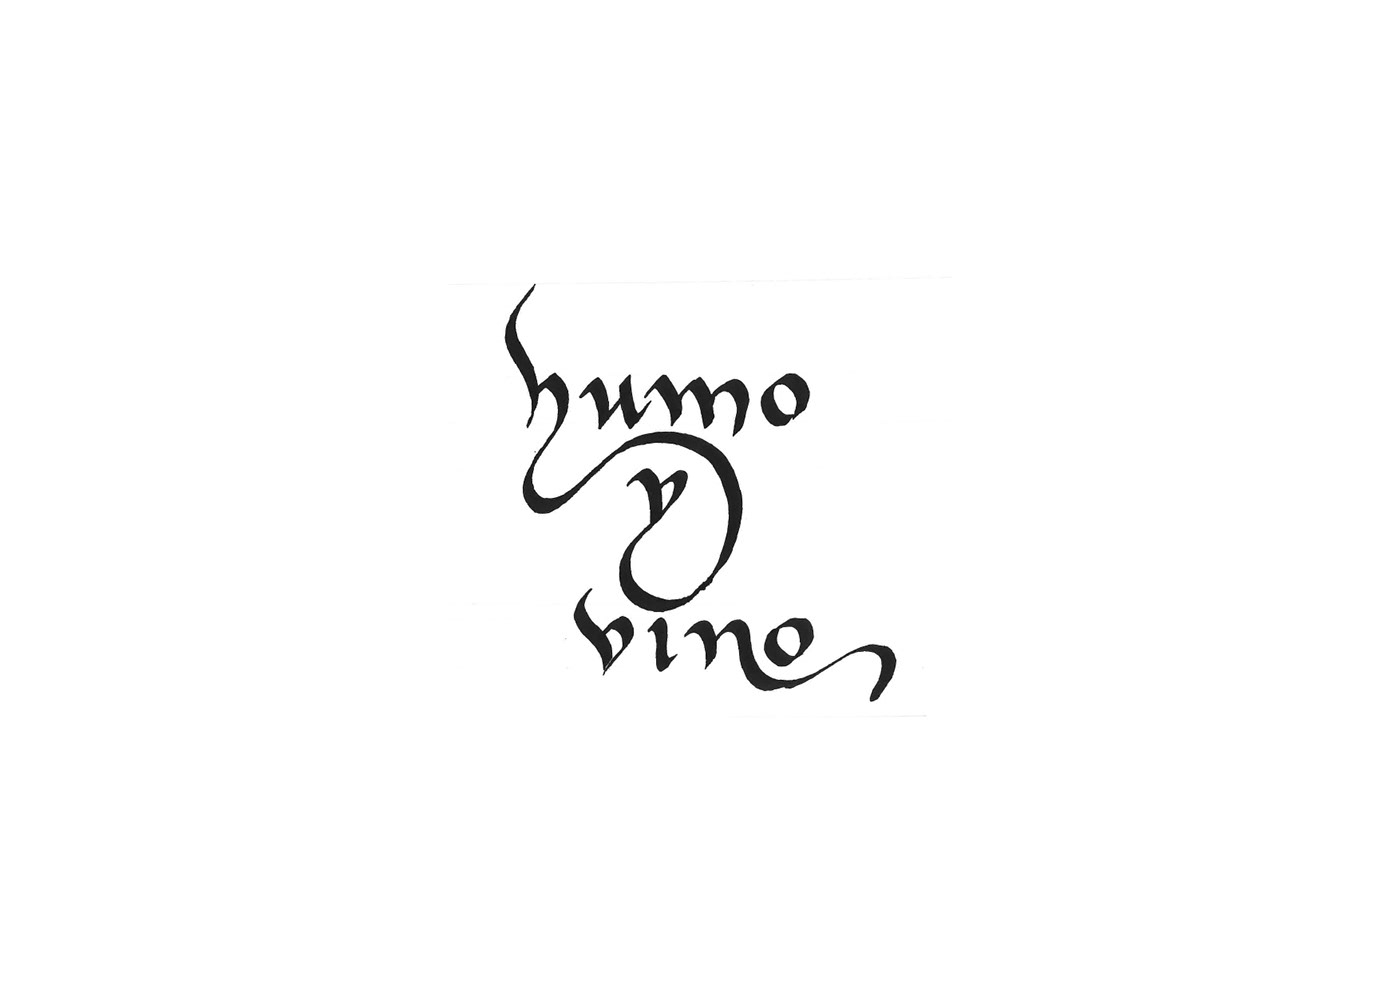 caligrafia tipografia diseño gráfico fadu uba